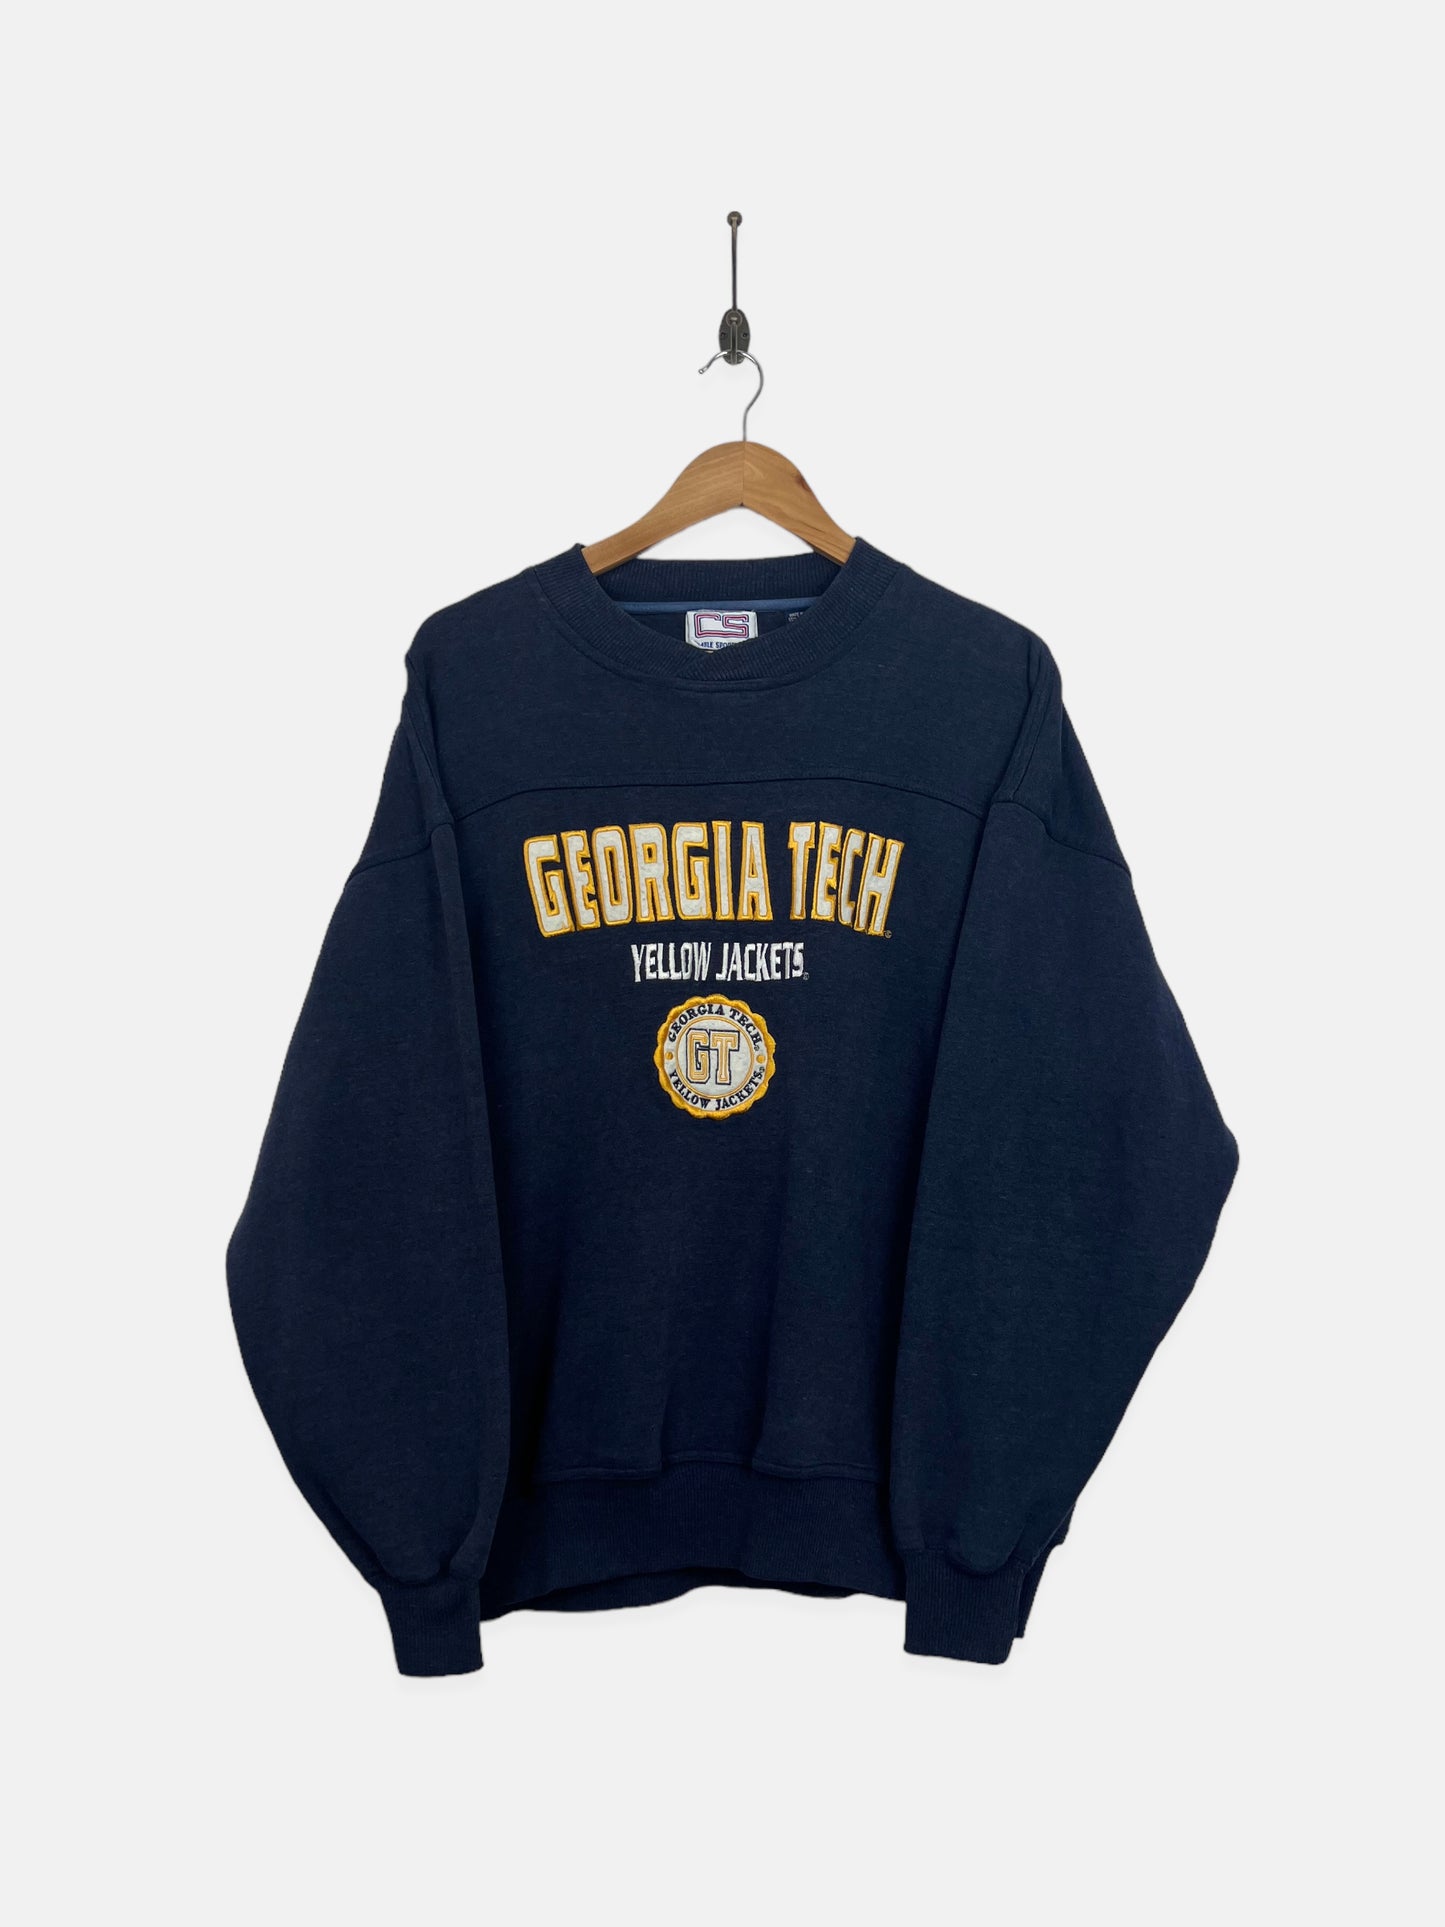 90's Georgia Tech Yellow Jackets Embroidered Vintage Sweatshirt Size M-L